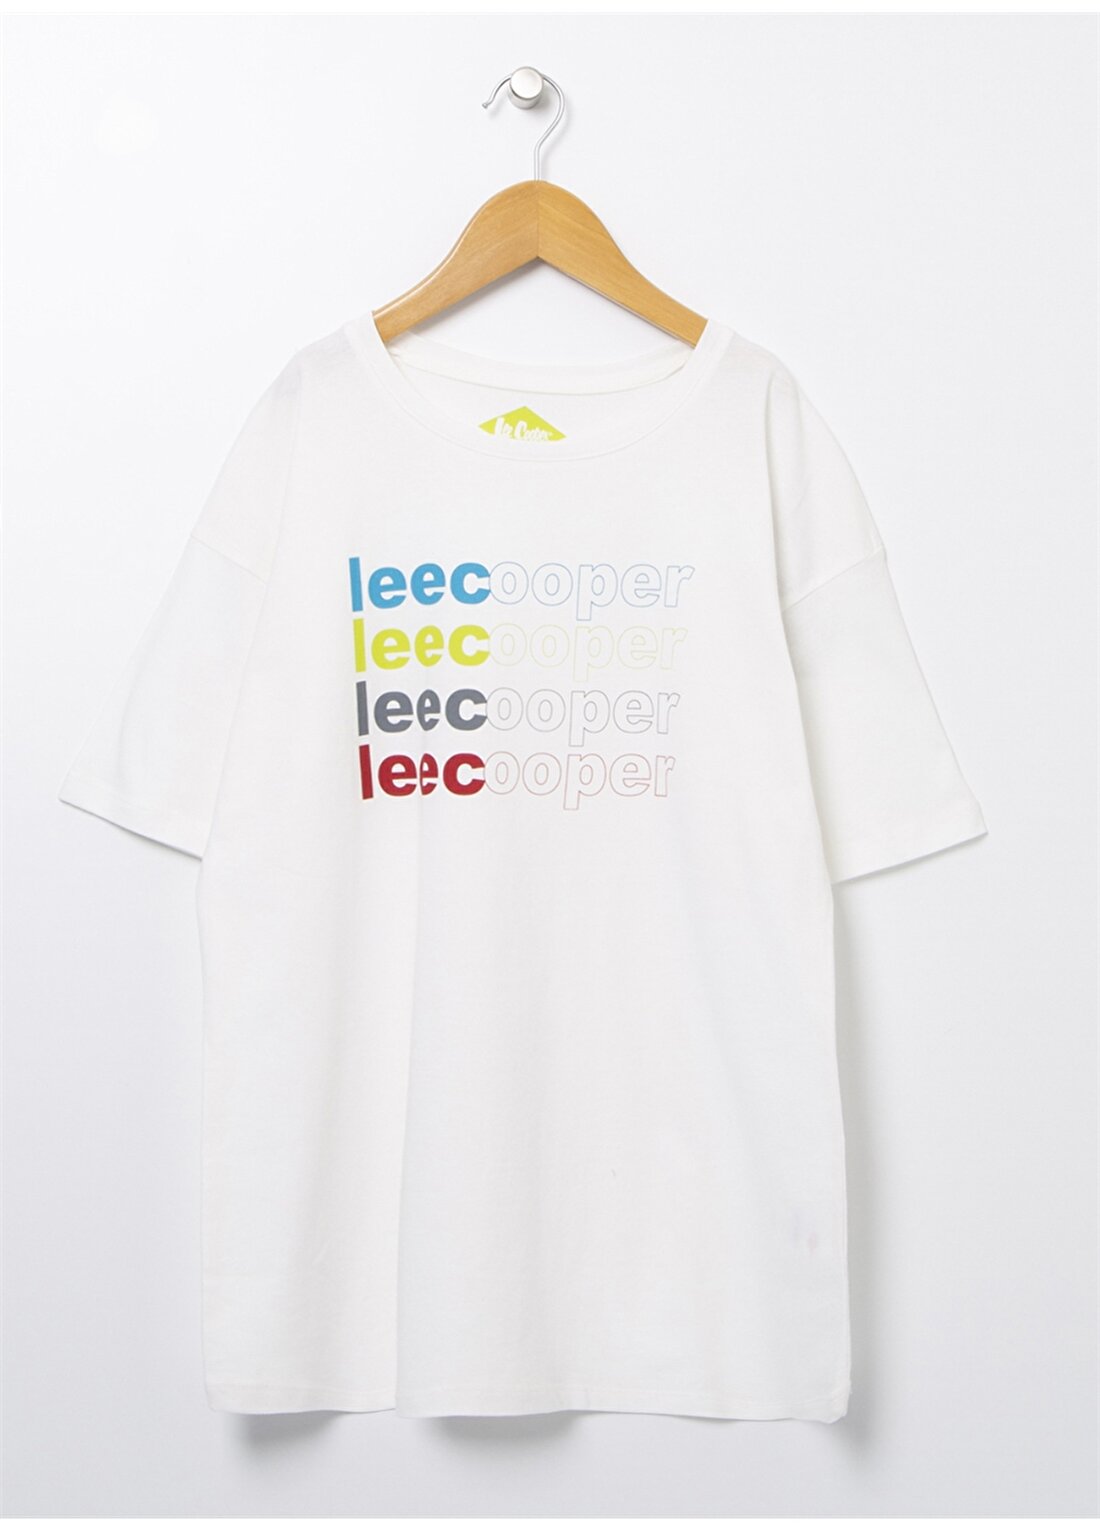 Lee Cooper Beyaz Erkek Çocuk T-Shirt 222 LCB 242005 BERT ERKEK T-SHIRT